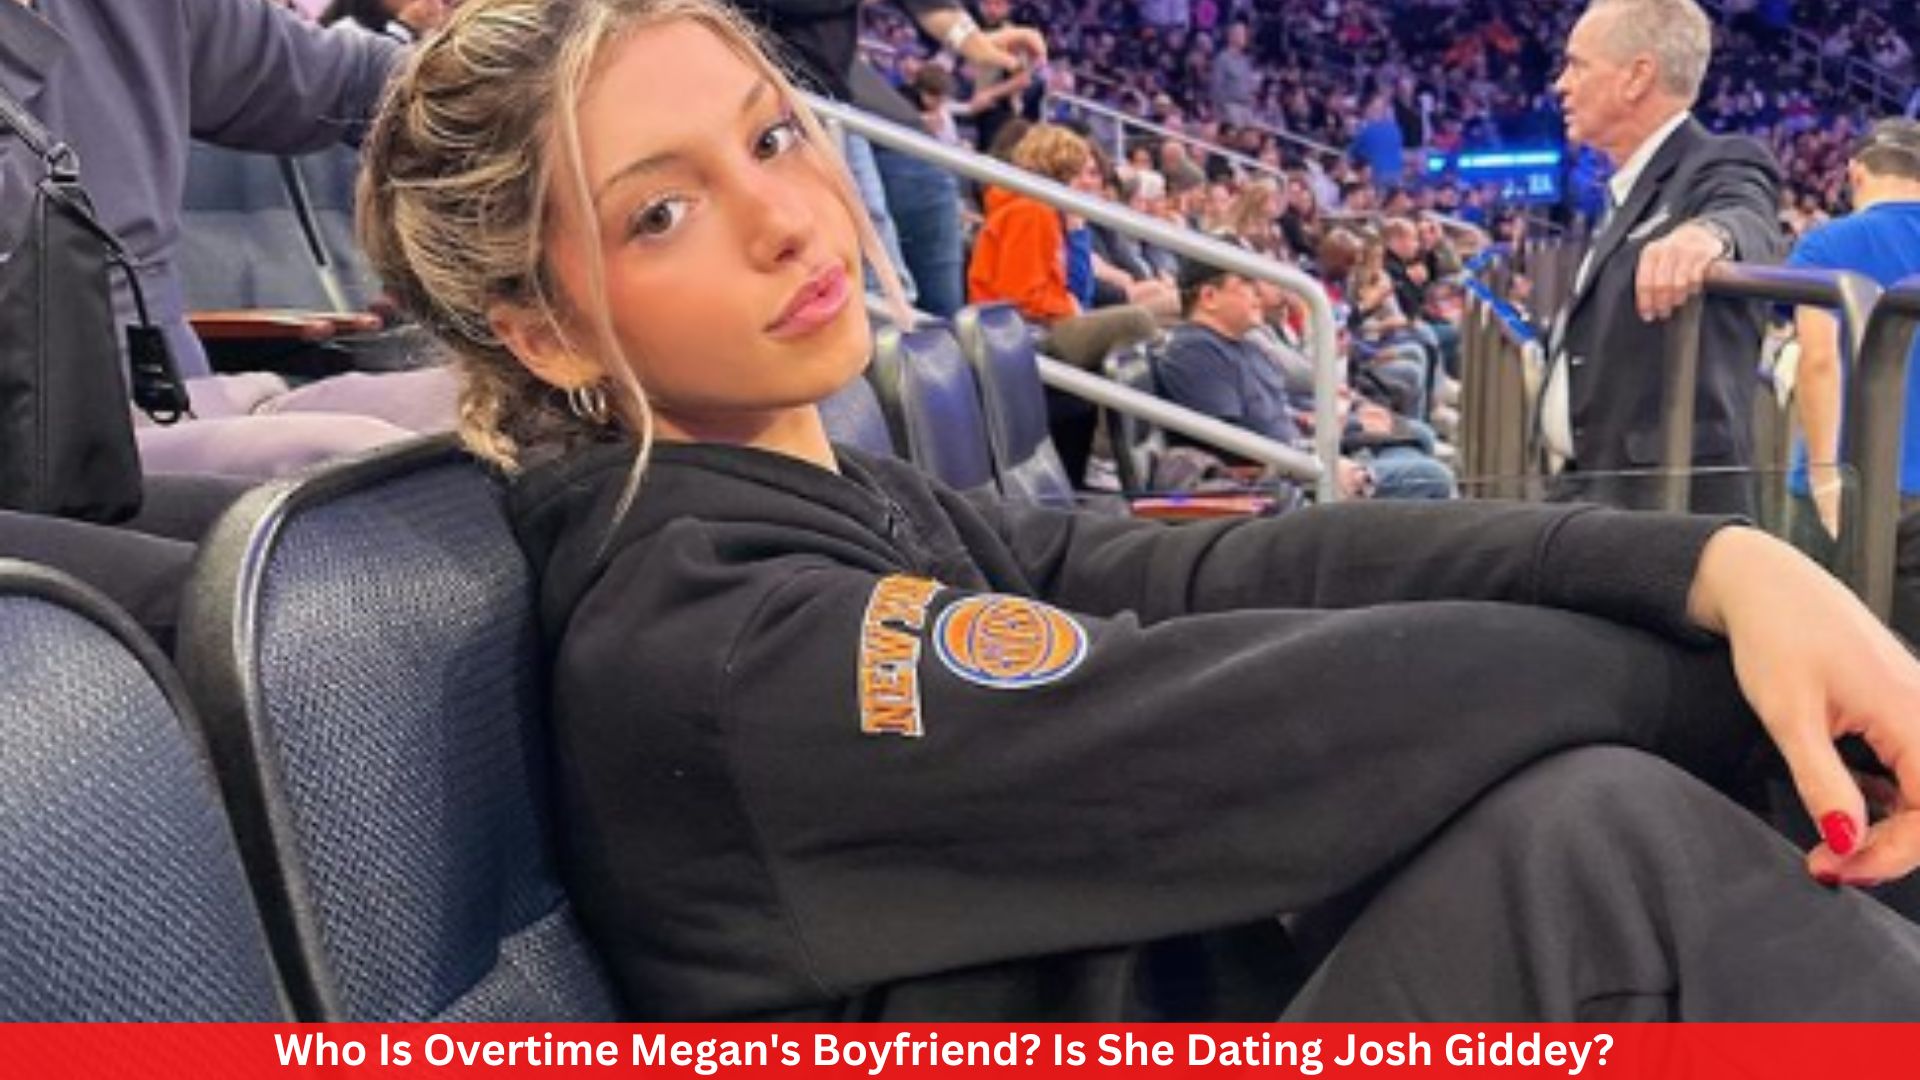 Who Is Overtime Megan's Boyfriend? Is She Dating Josh Giddey?